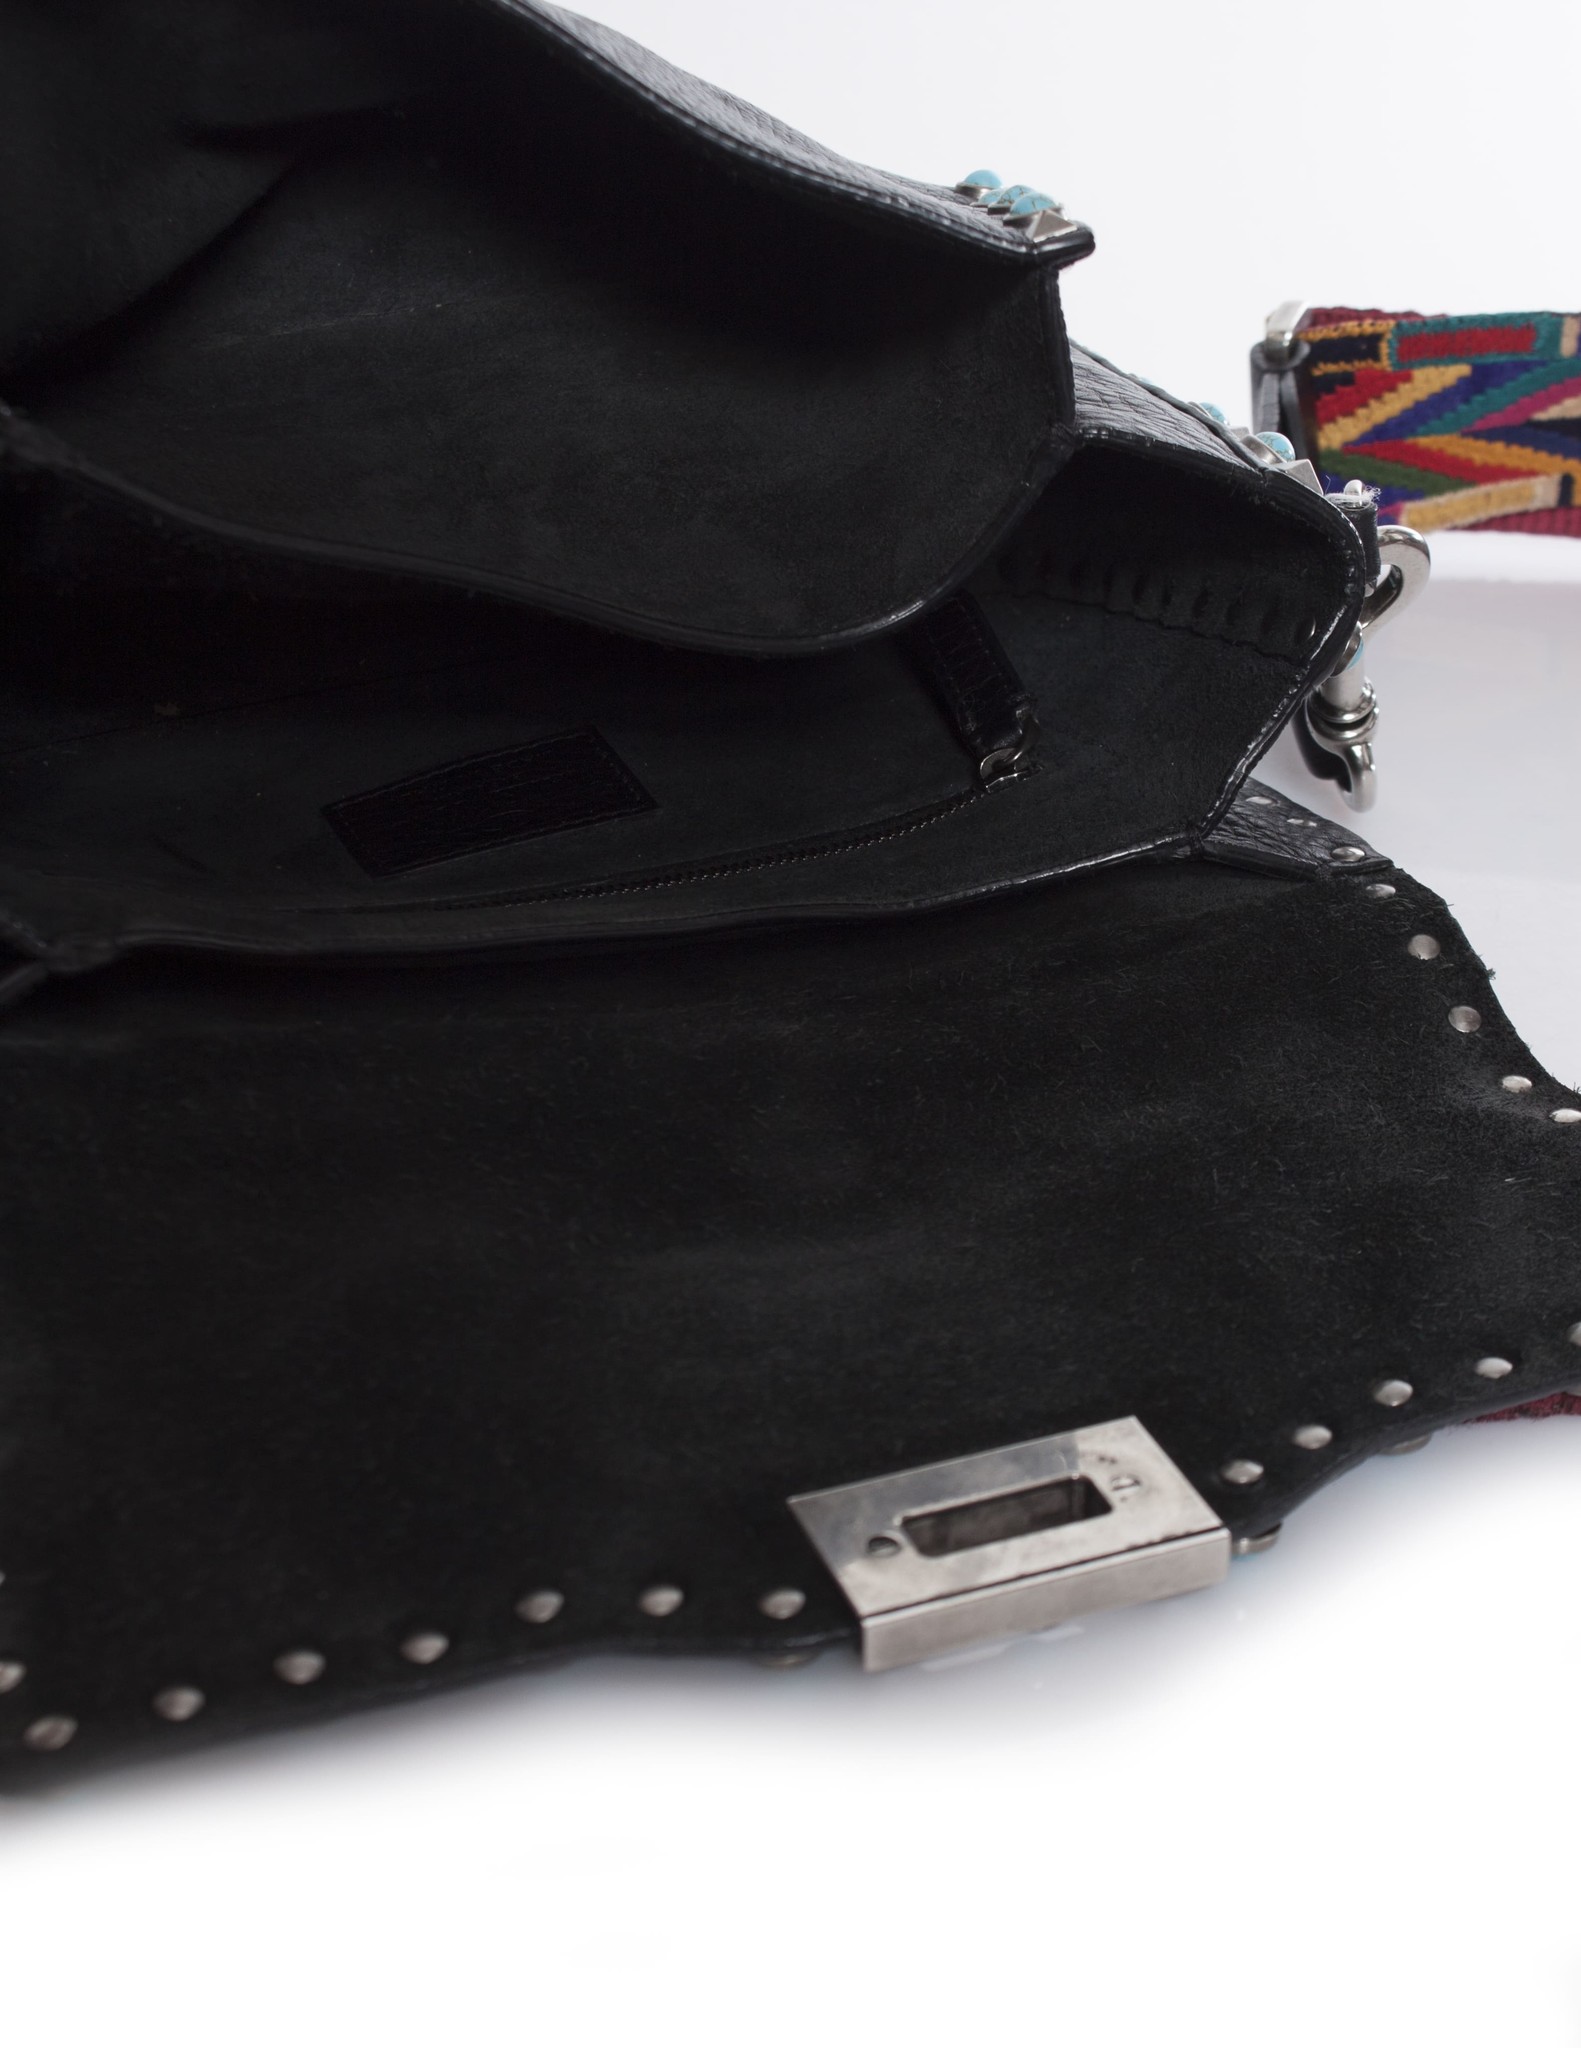 Vintage Style Sling Bag With Lock, Guitar Strap Crossbody Bag